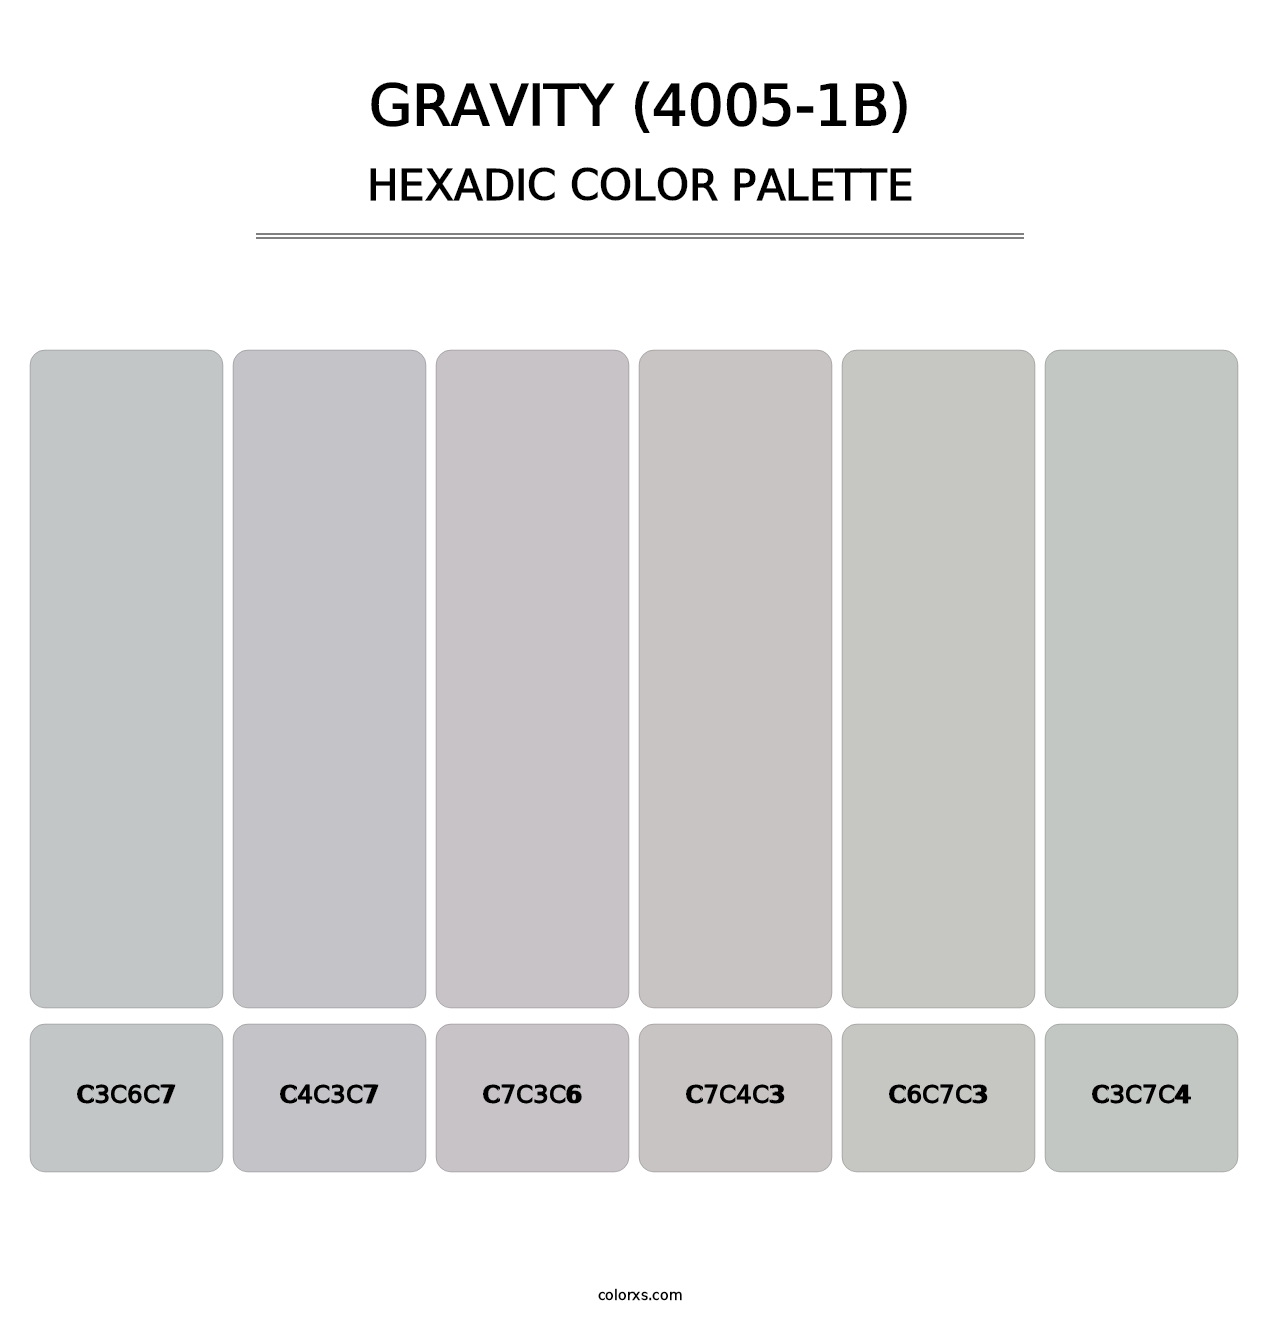 Gravity (4005-1B) - Hexadic Color Palette